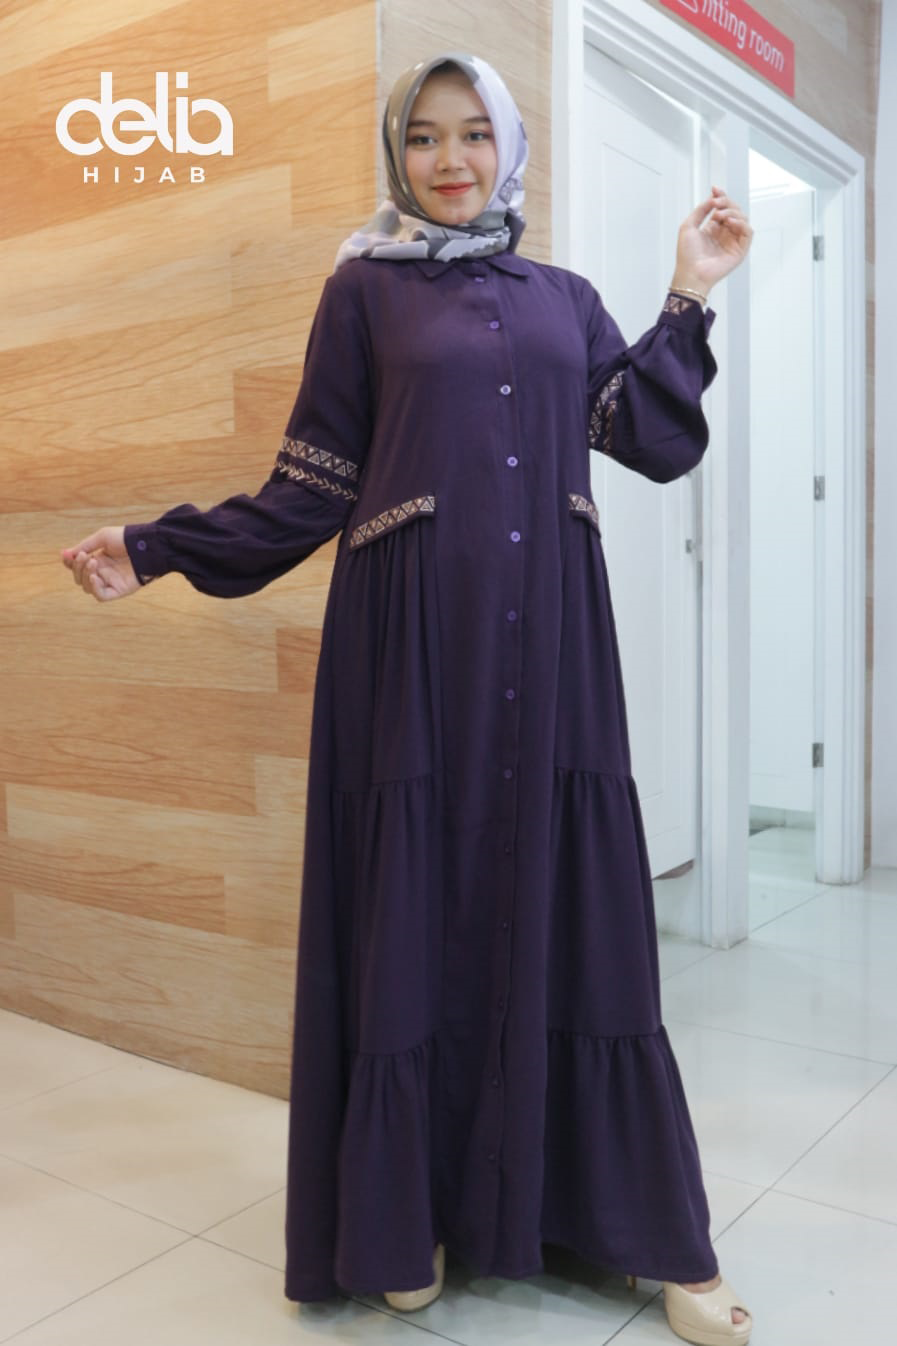 Baju Muslim Modern - Narra Dress - Delia Hijab Dark Purple